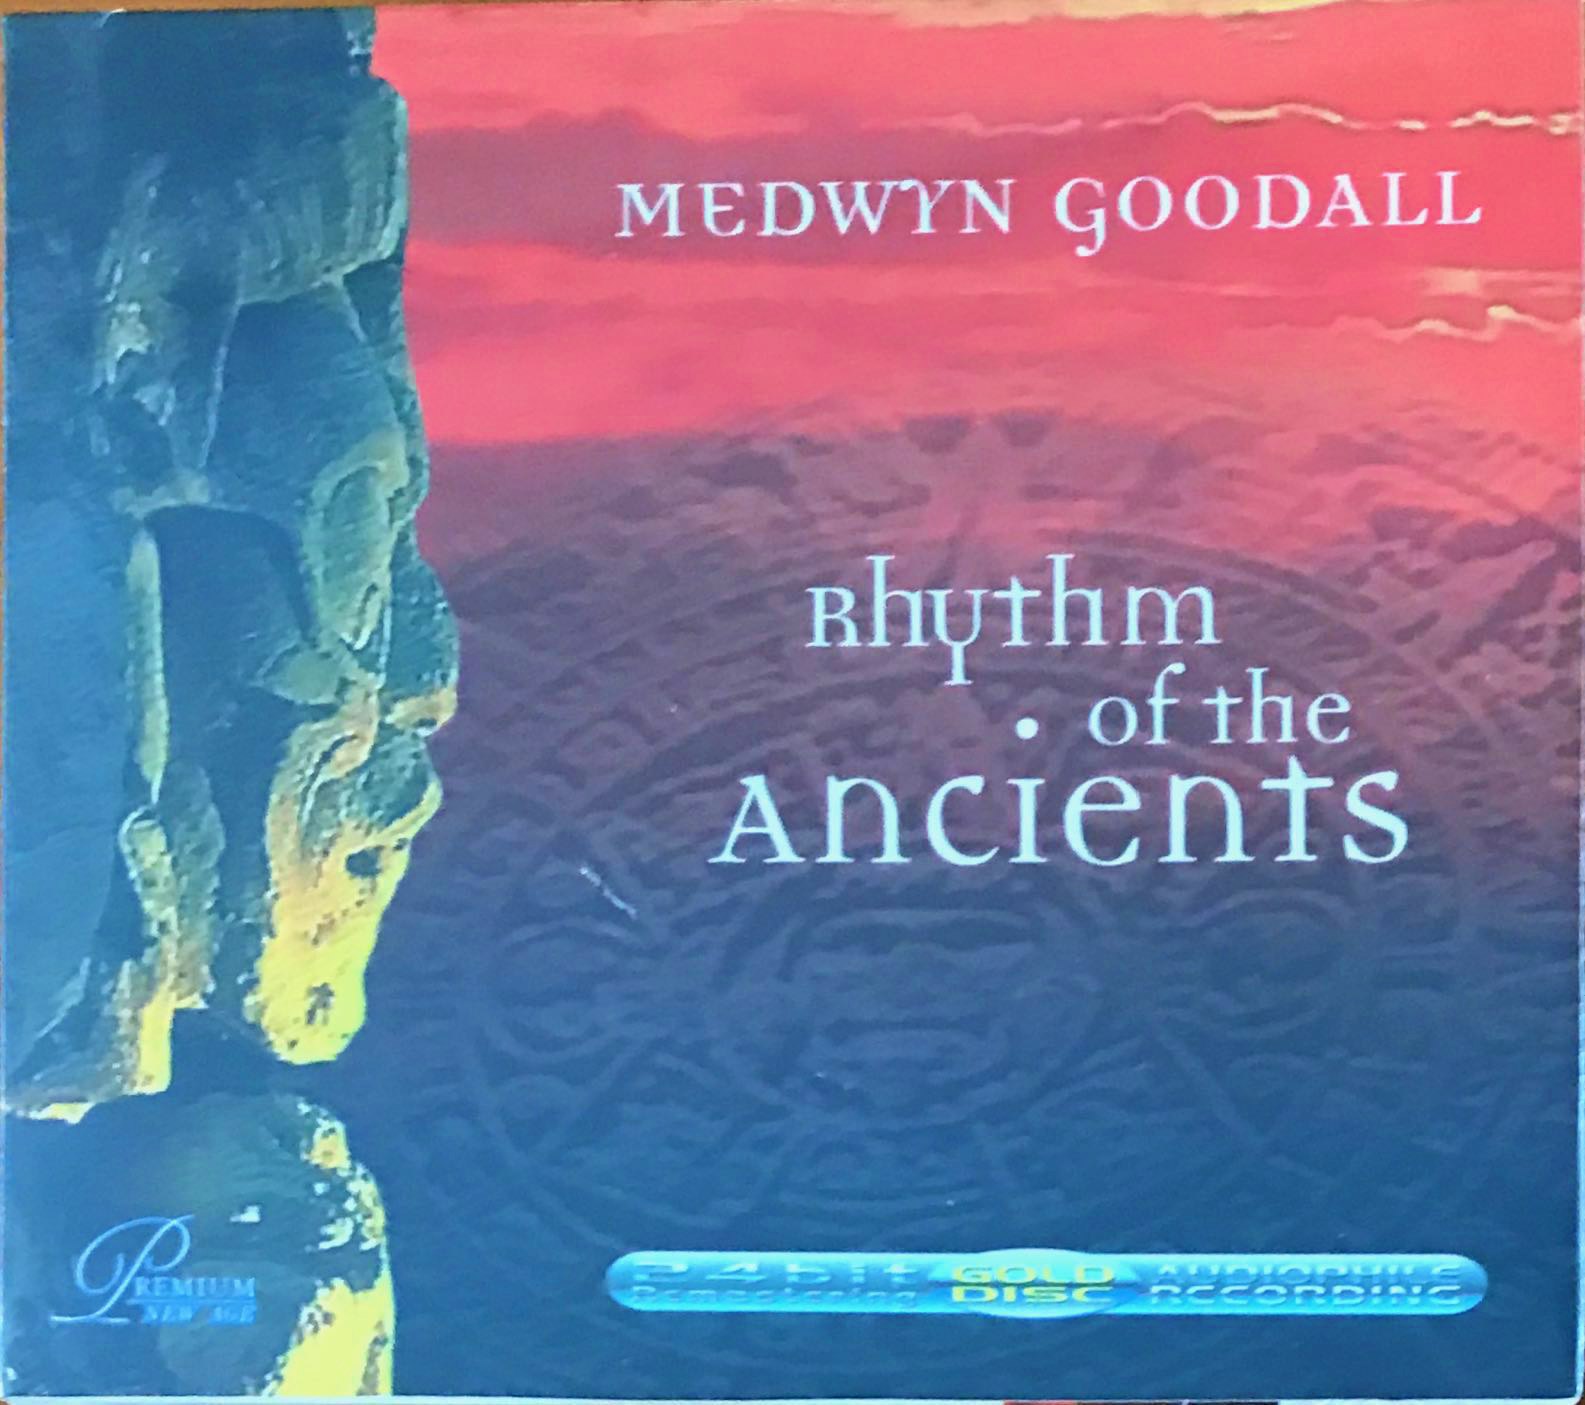 Medwyn Goodall - RHYTHM OF THE ANCIENTS 24bit 192kHz Remastering Audiophile CD